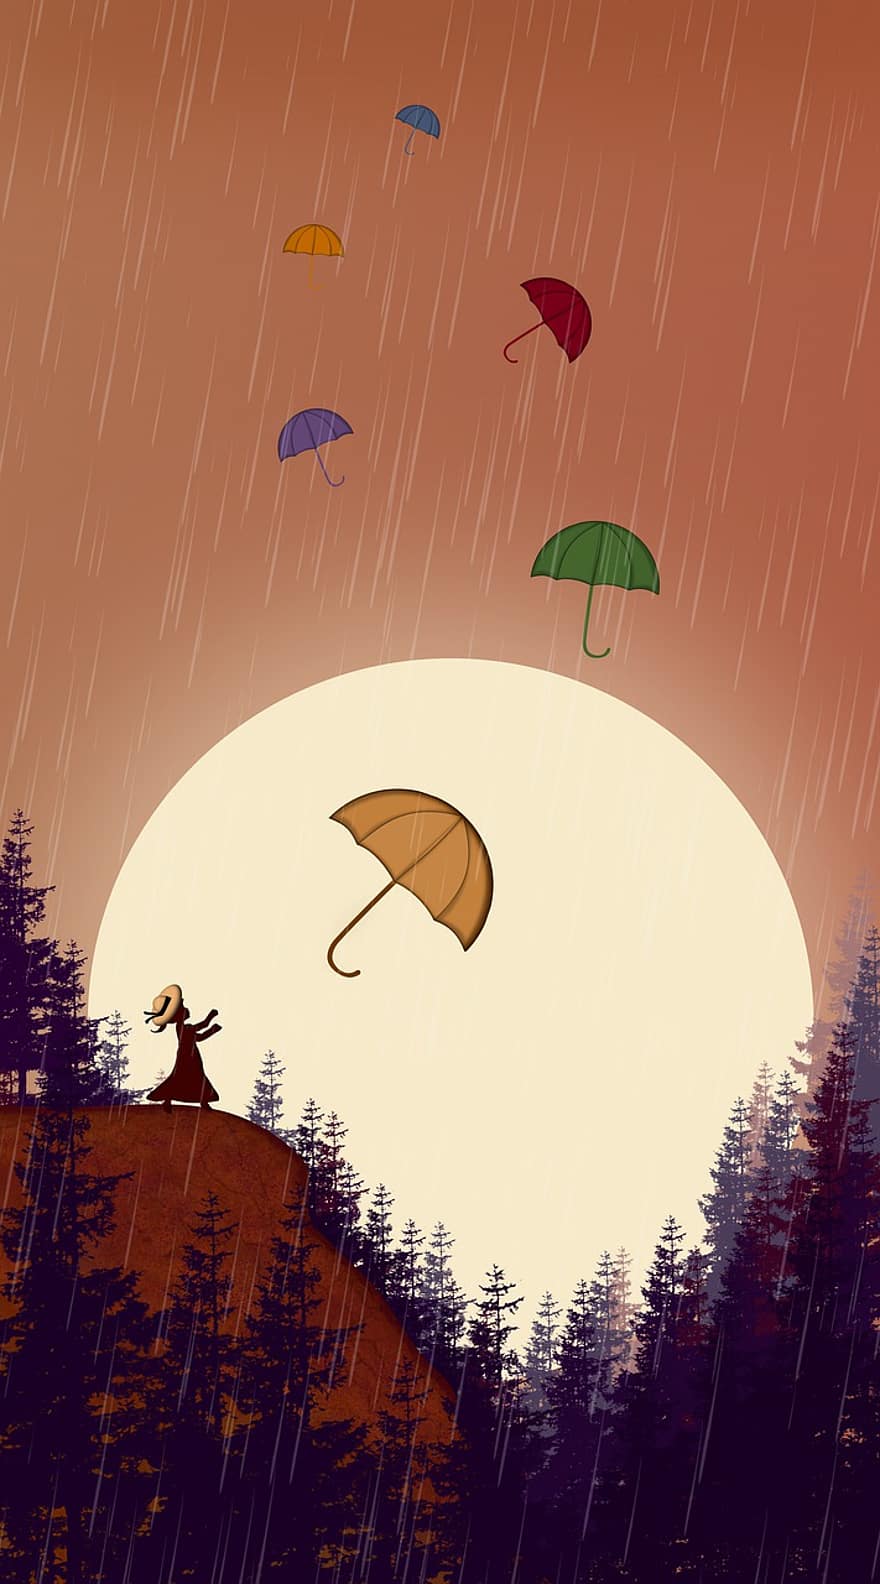 Regen, Regenschirm, Sonnenuntergang, Natur, Mädchen, Wald, Vektor, Herbst, Baum, Illustration, Wetter